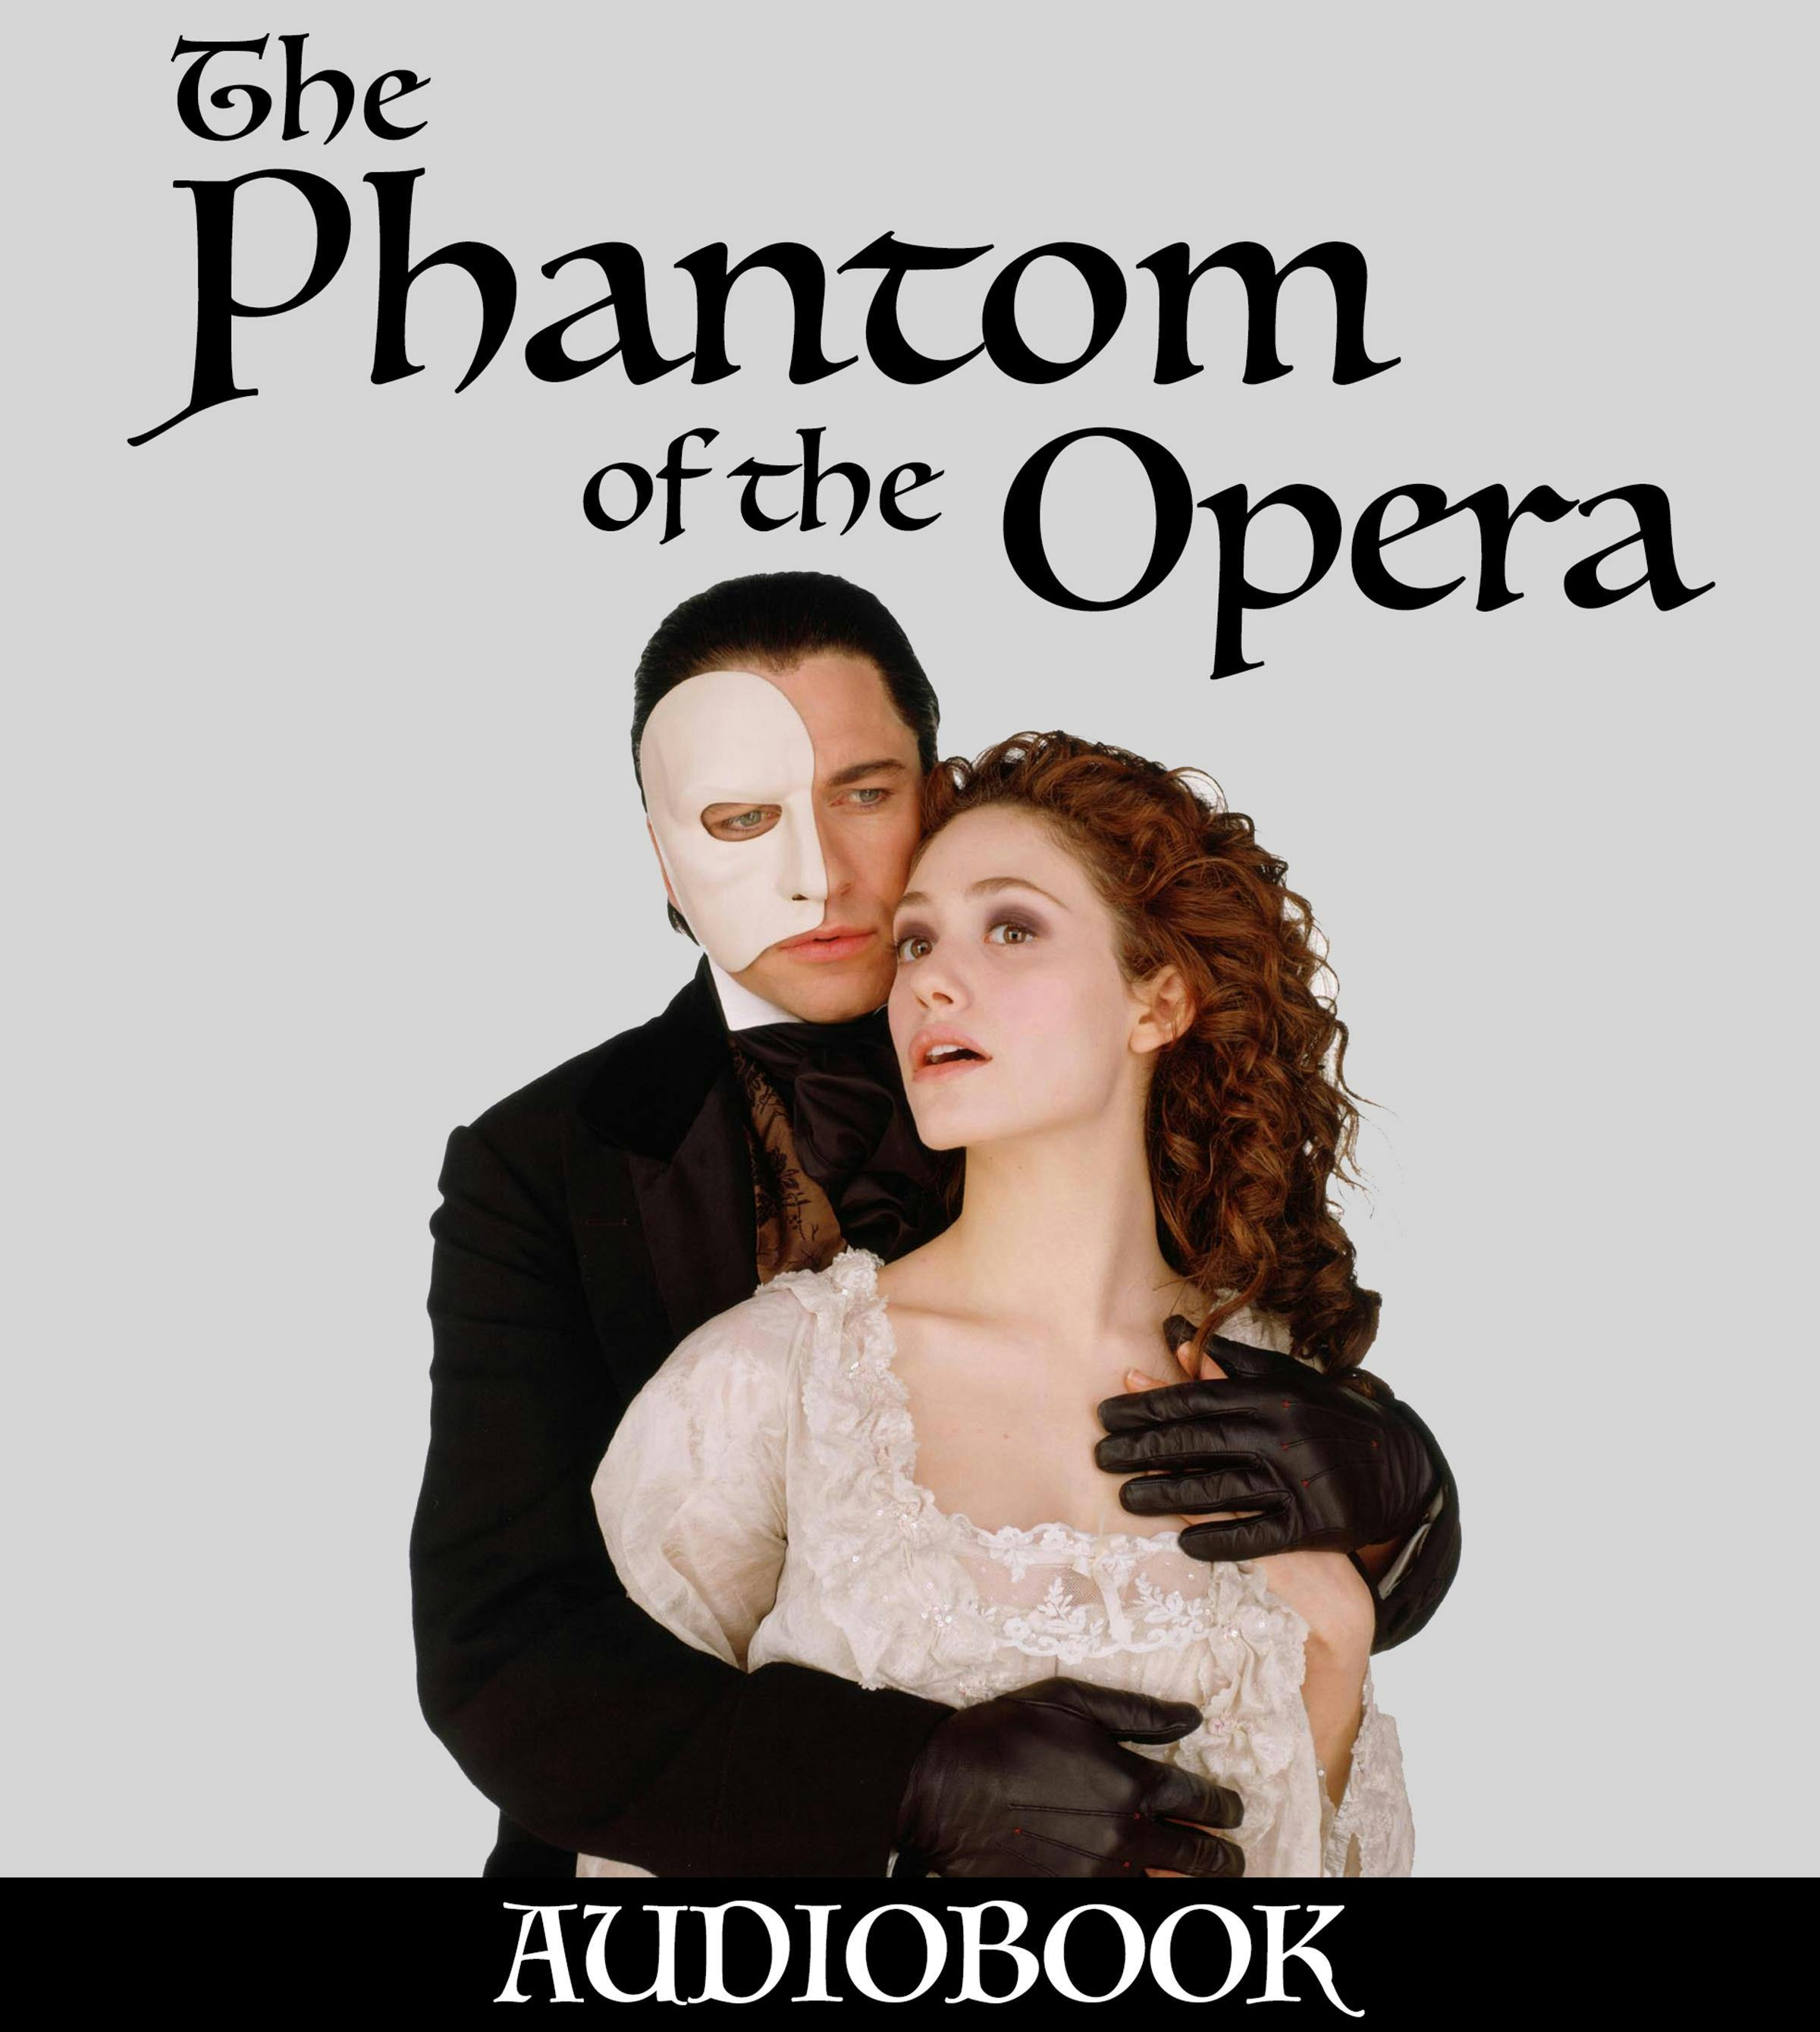 The Phantom of the Opera - undefined